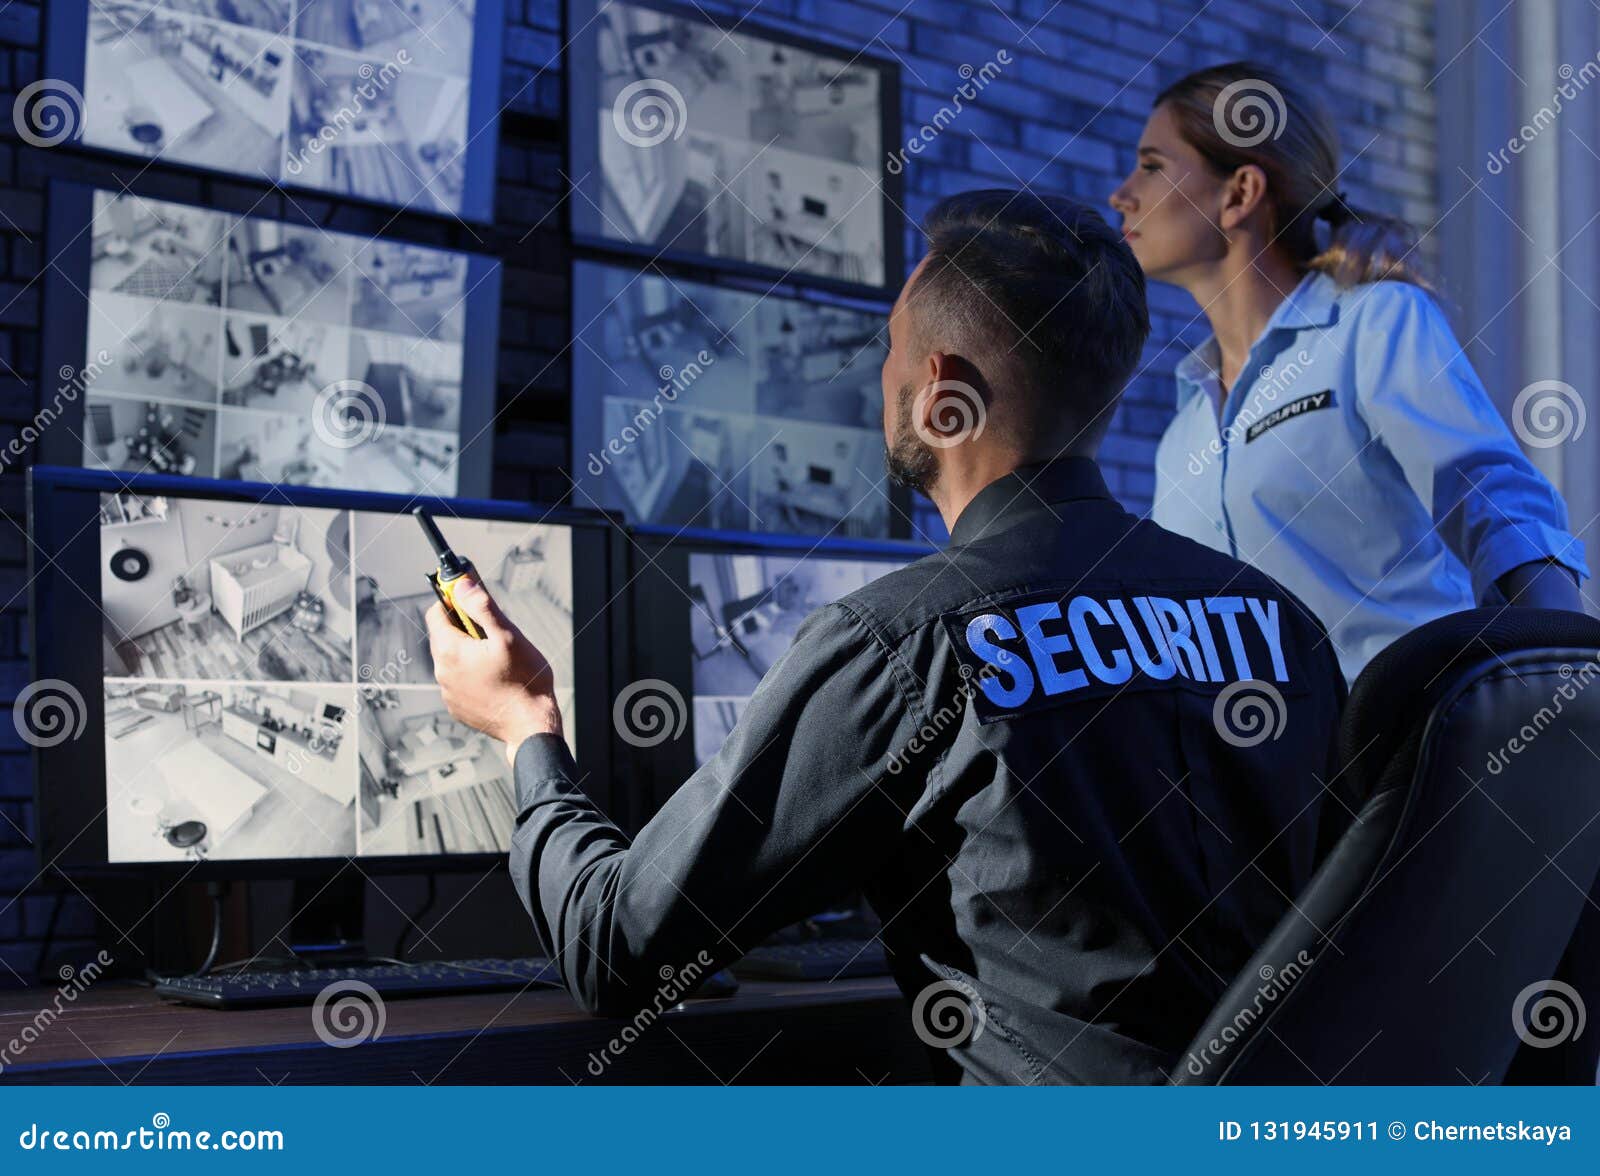 security guards monitoring modern cctv cameras